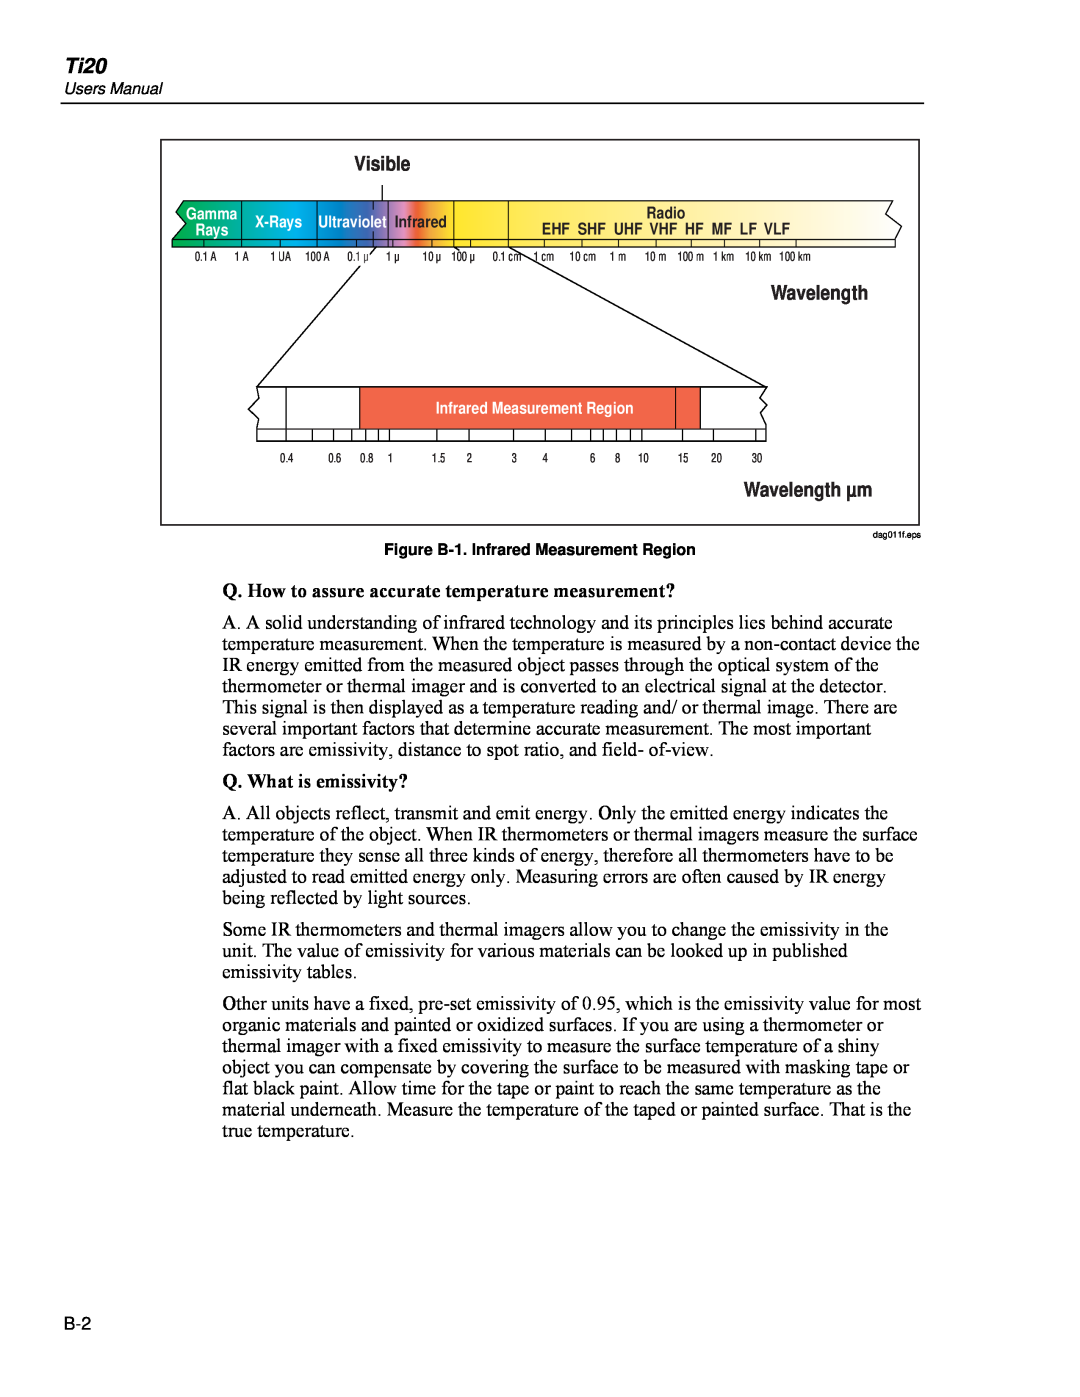 Fluke Ti20 user manual Visible, Wavelength µm, Q. What is emissivity? 